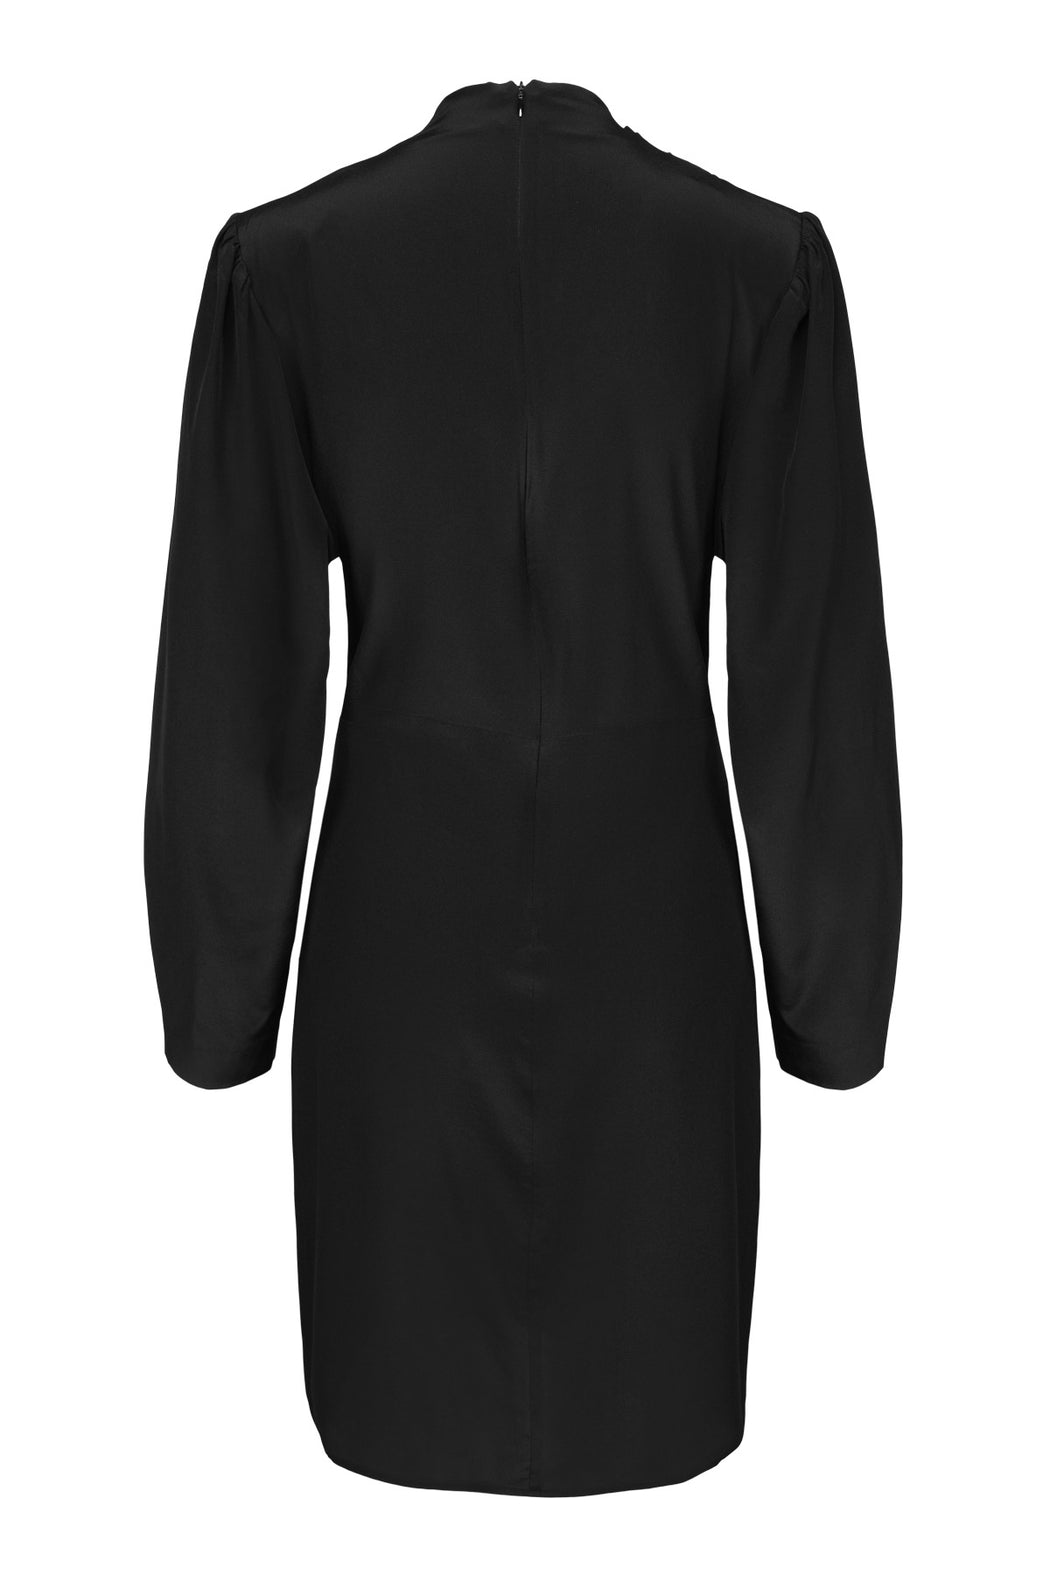 Envelope1976 Jet dress, Black Dress Black